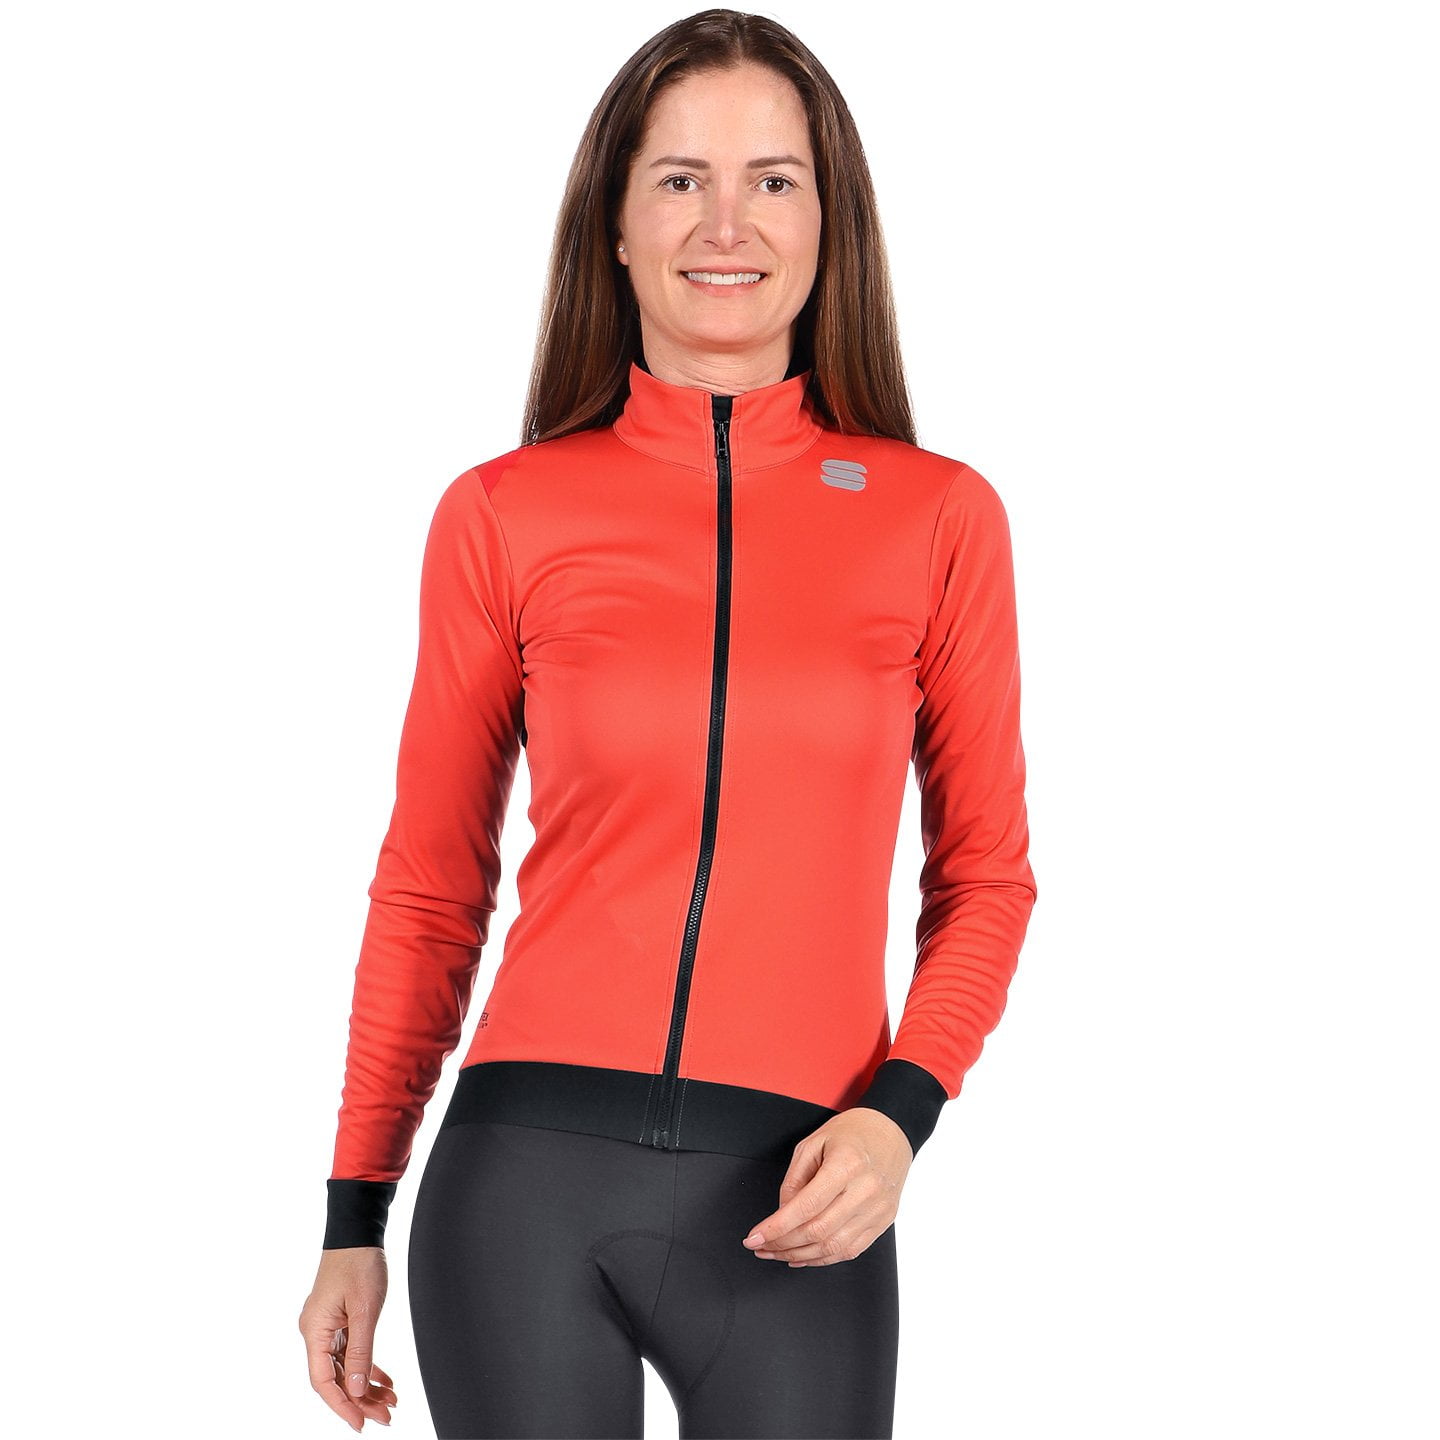 SPORTFUL Fiandre medium Winter Jacket Women’s Cycling Jacket, size M, Bike jacket, Cycling clothing